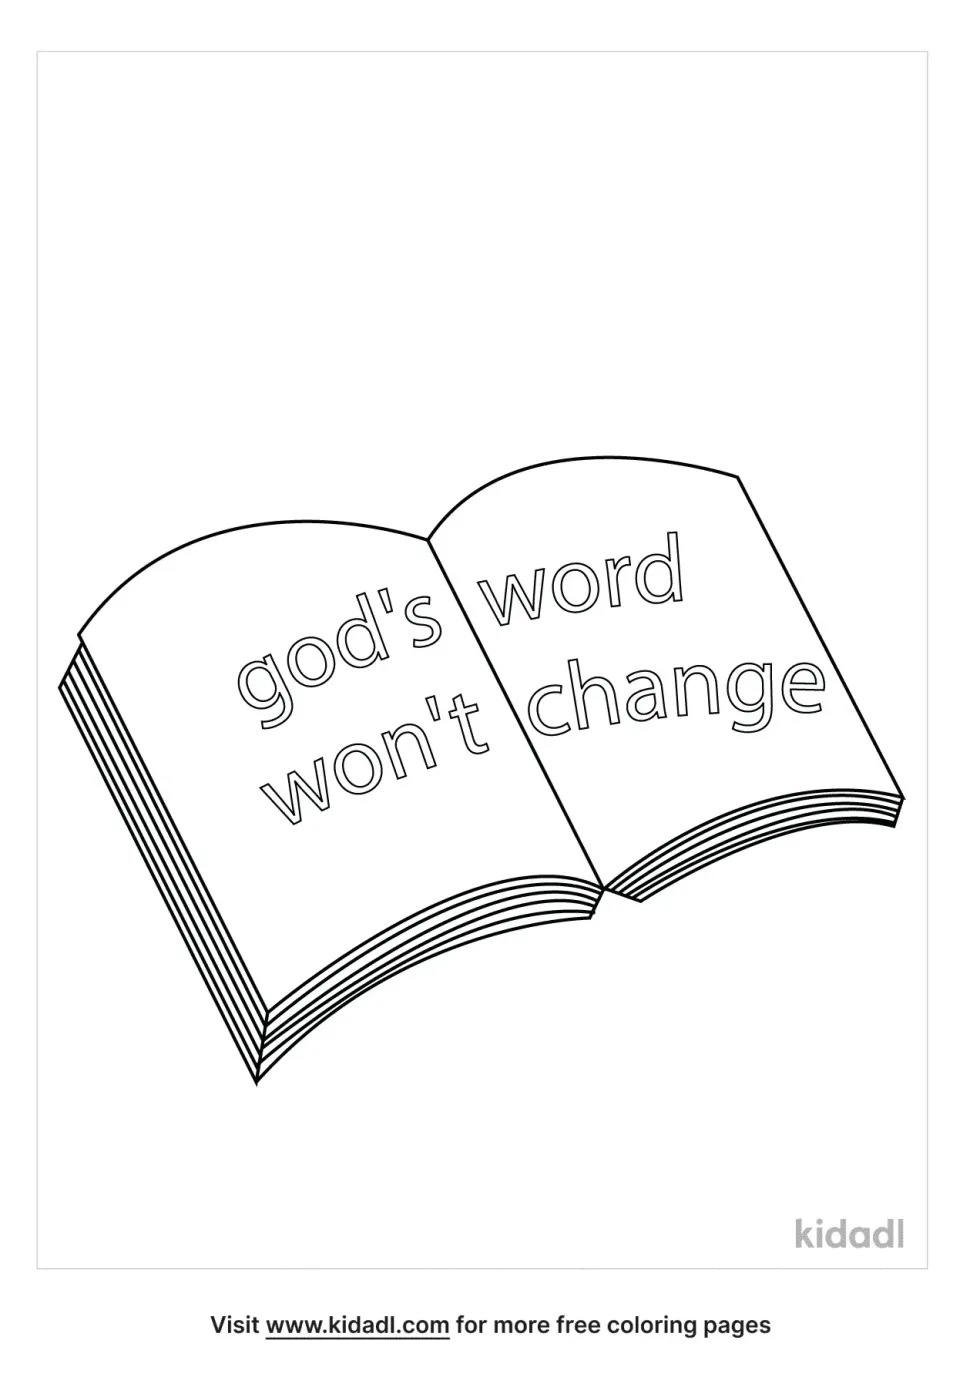 God's Word Won't Change